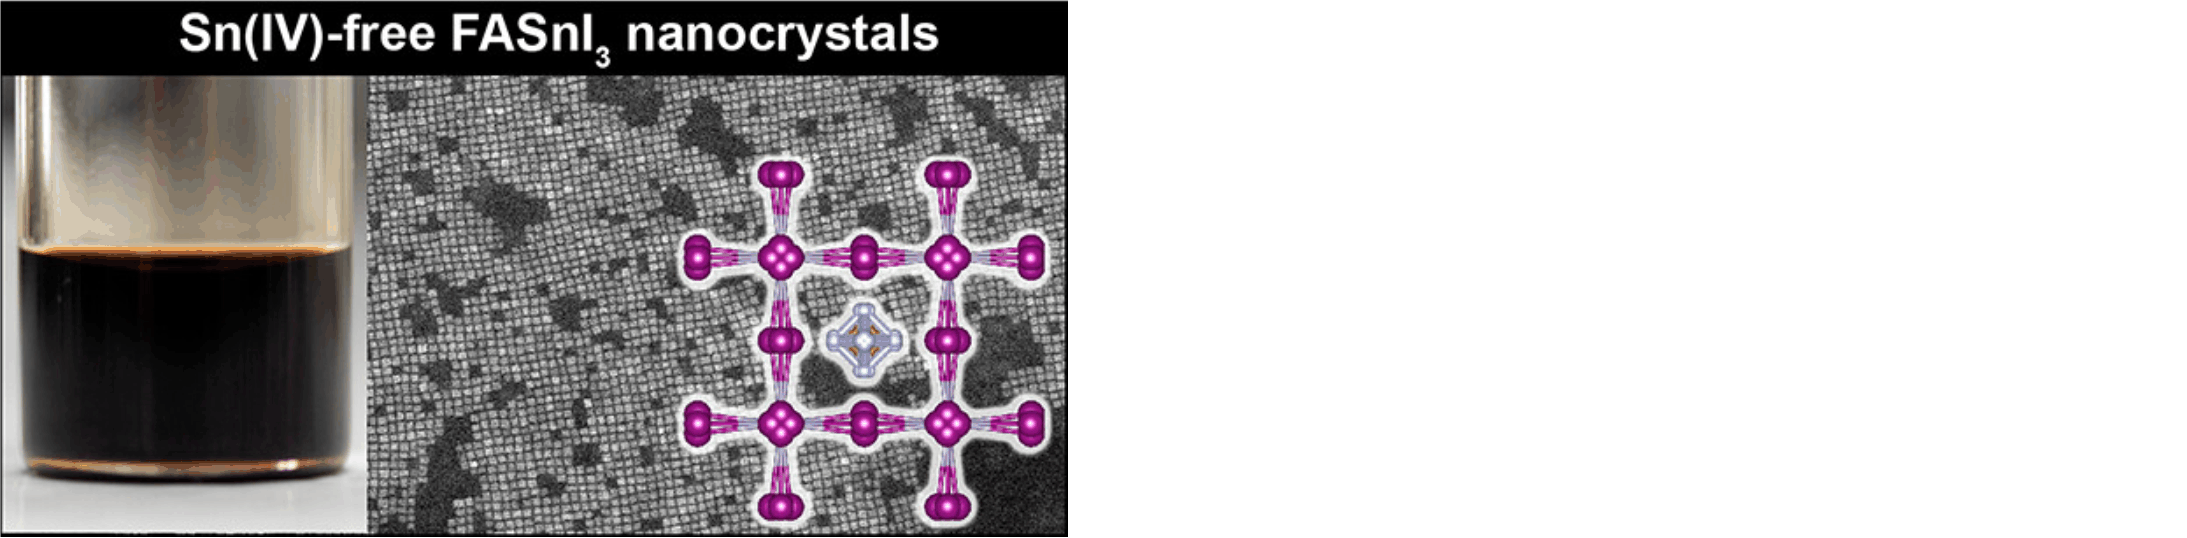 Intrinsic Formamidinium Tin Iodide Nanocrystals by Suppressing the Sn(IV) Impurities